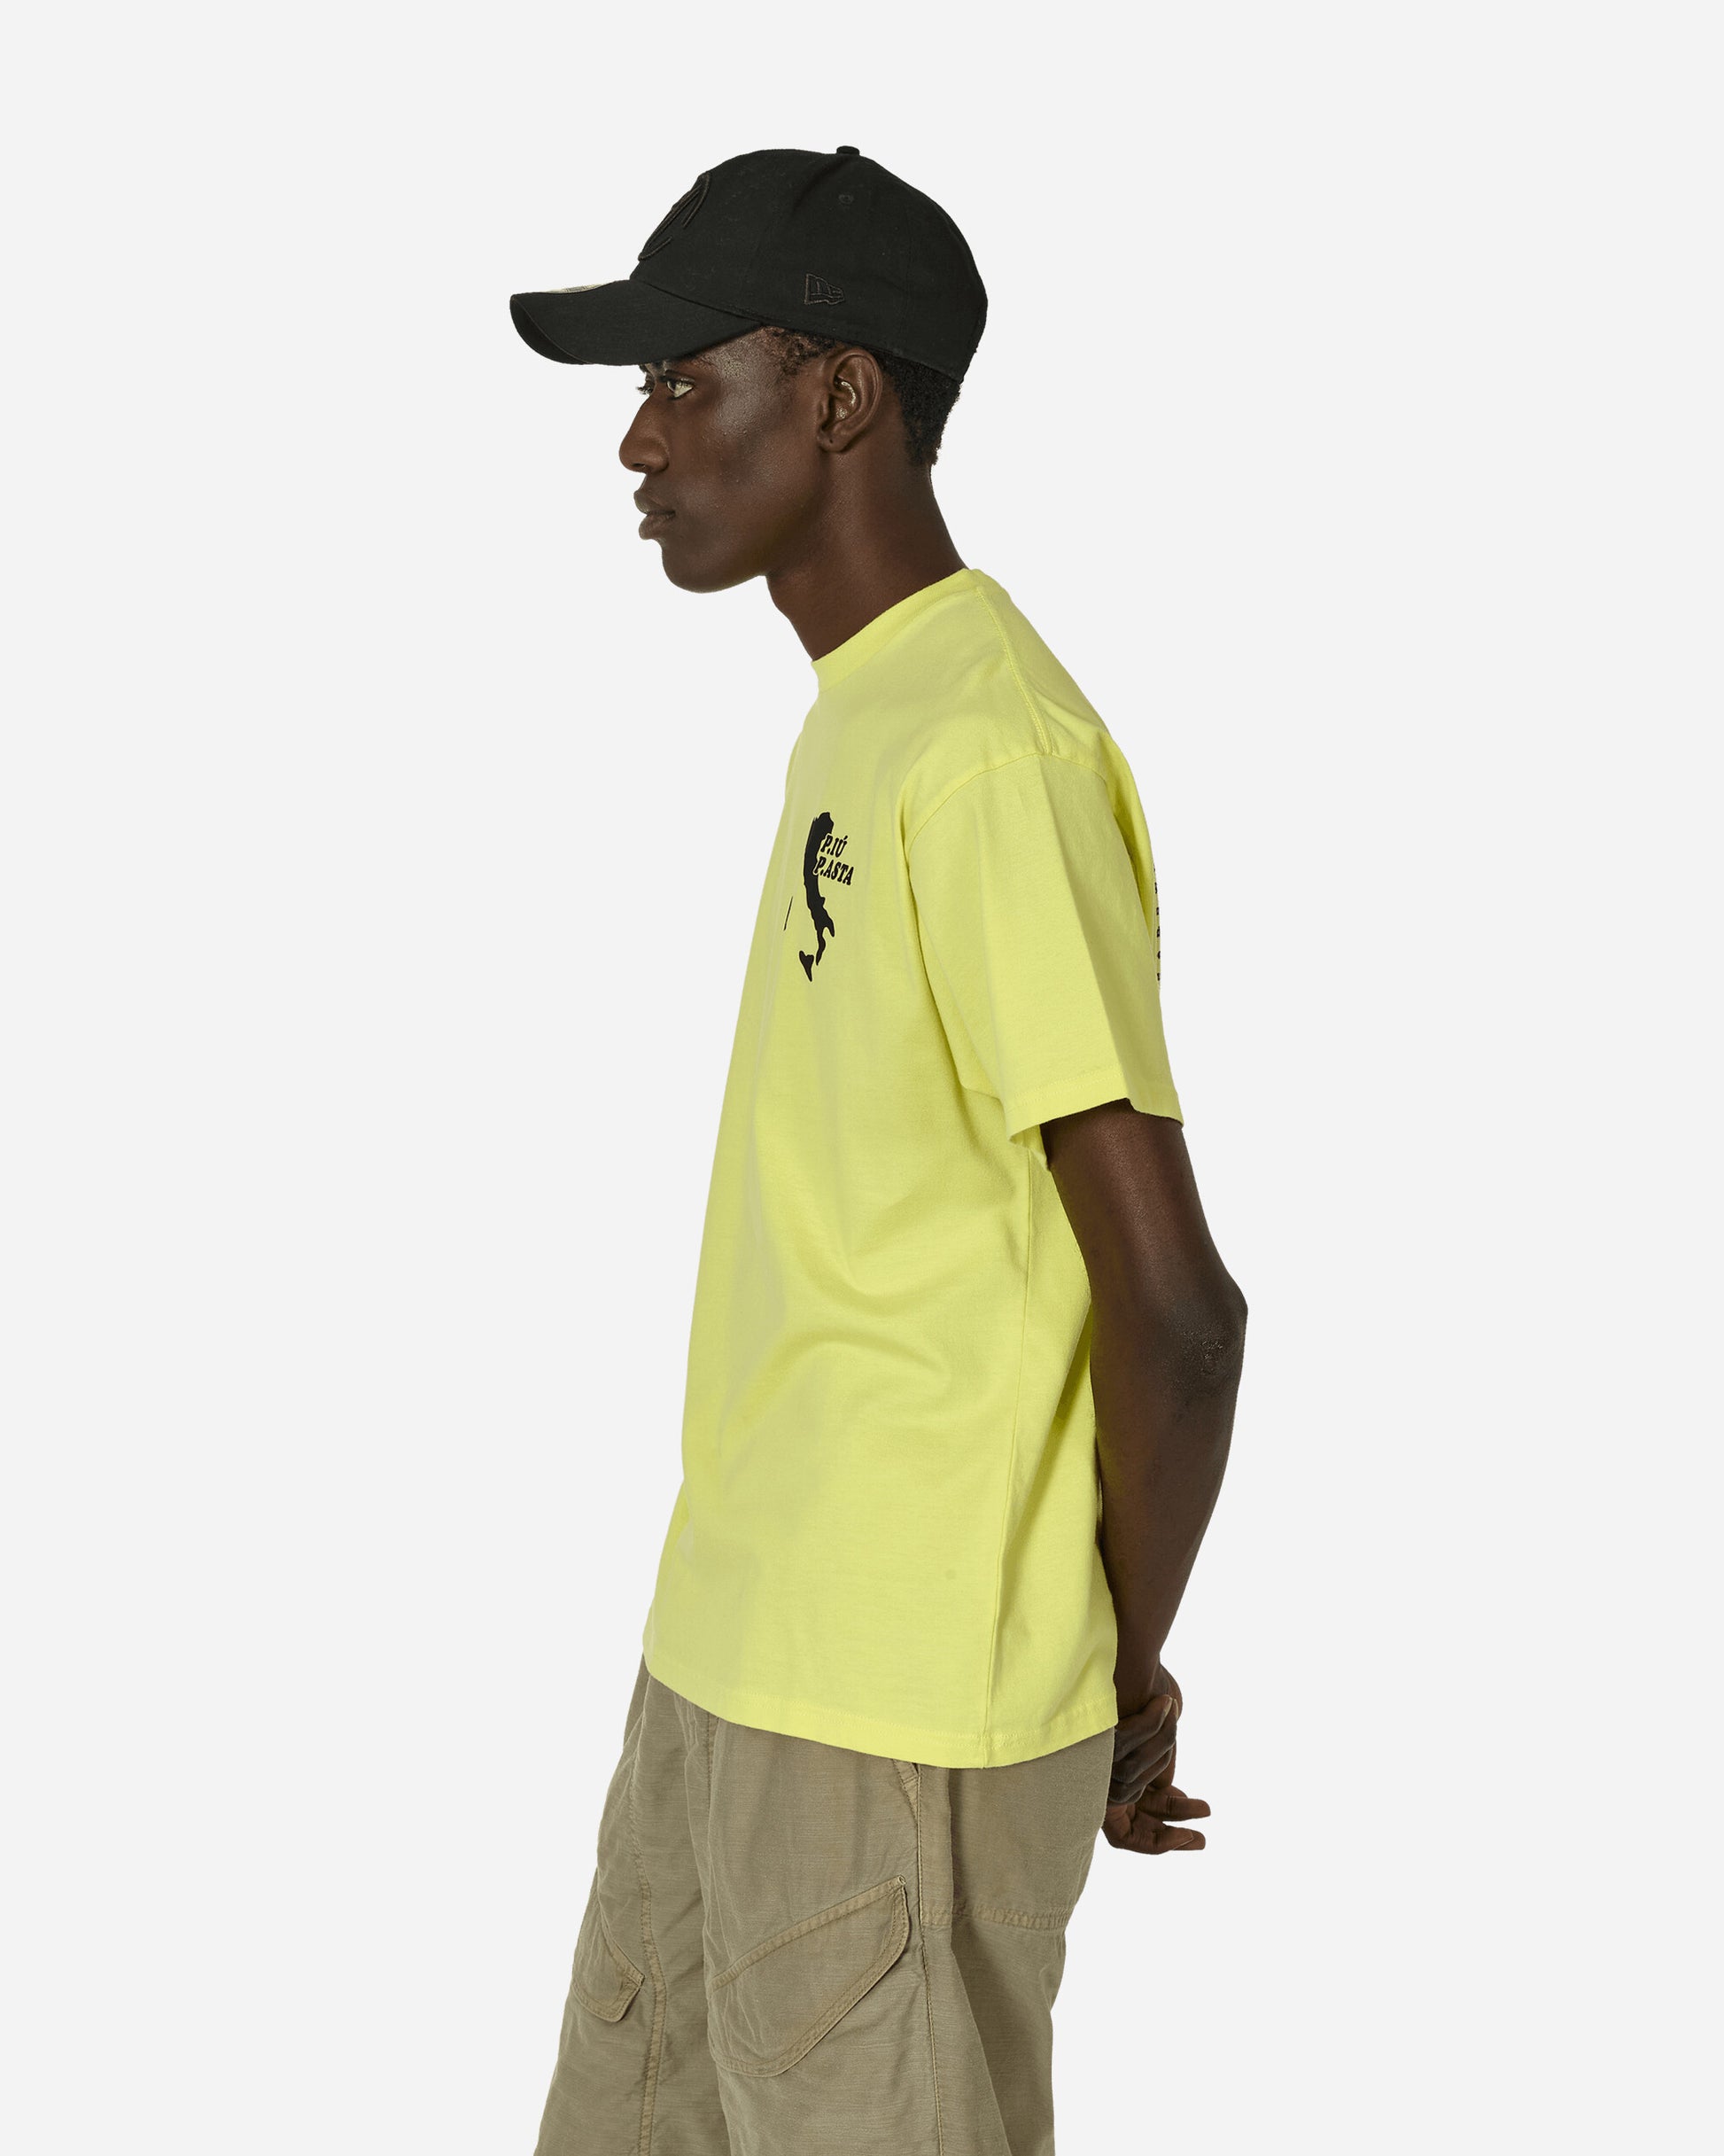 Public Possession "P.Iu P.Asta" T-Shirt Stonewashed Yellow T-Shirts Shortsleeve PPMODA24-010  1